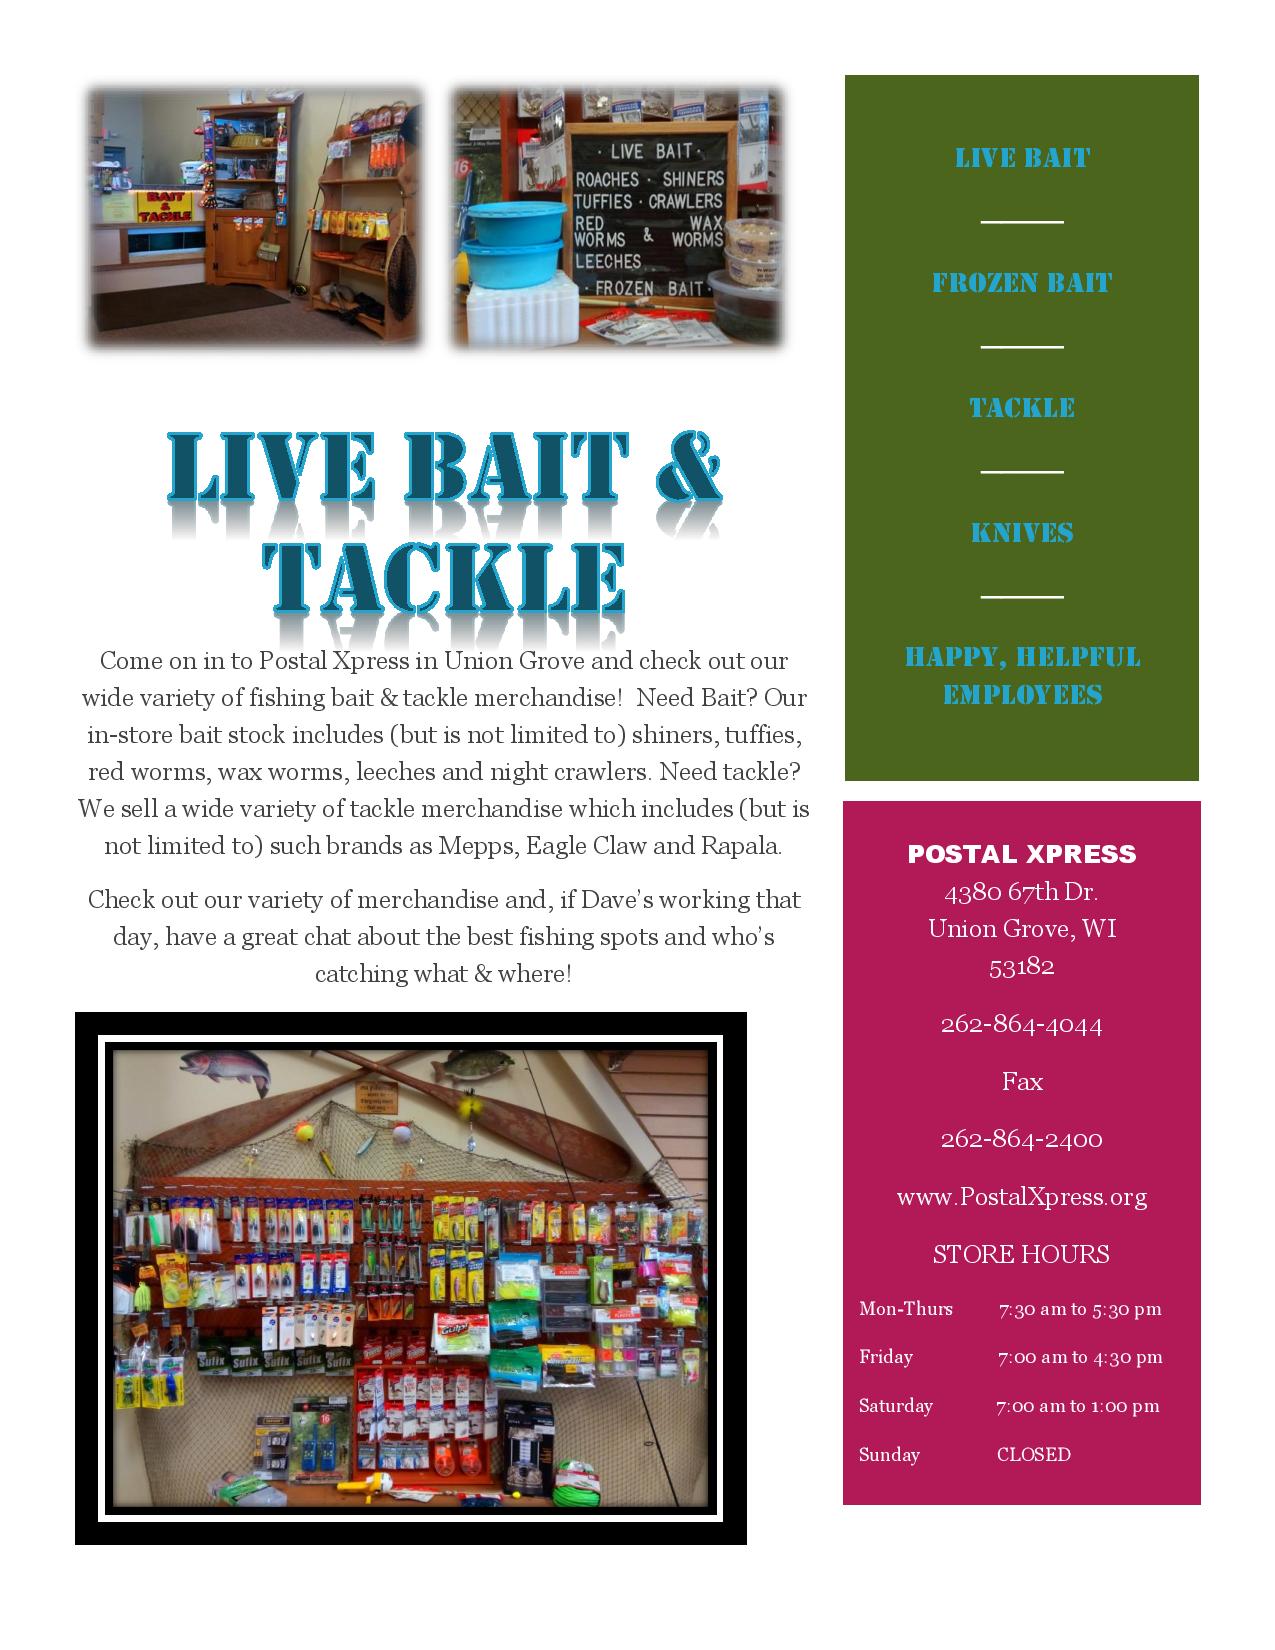 Live Bait & Tackle, Union Grove, WI